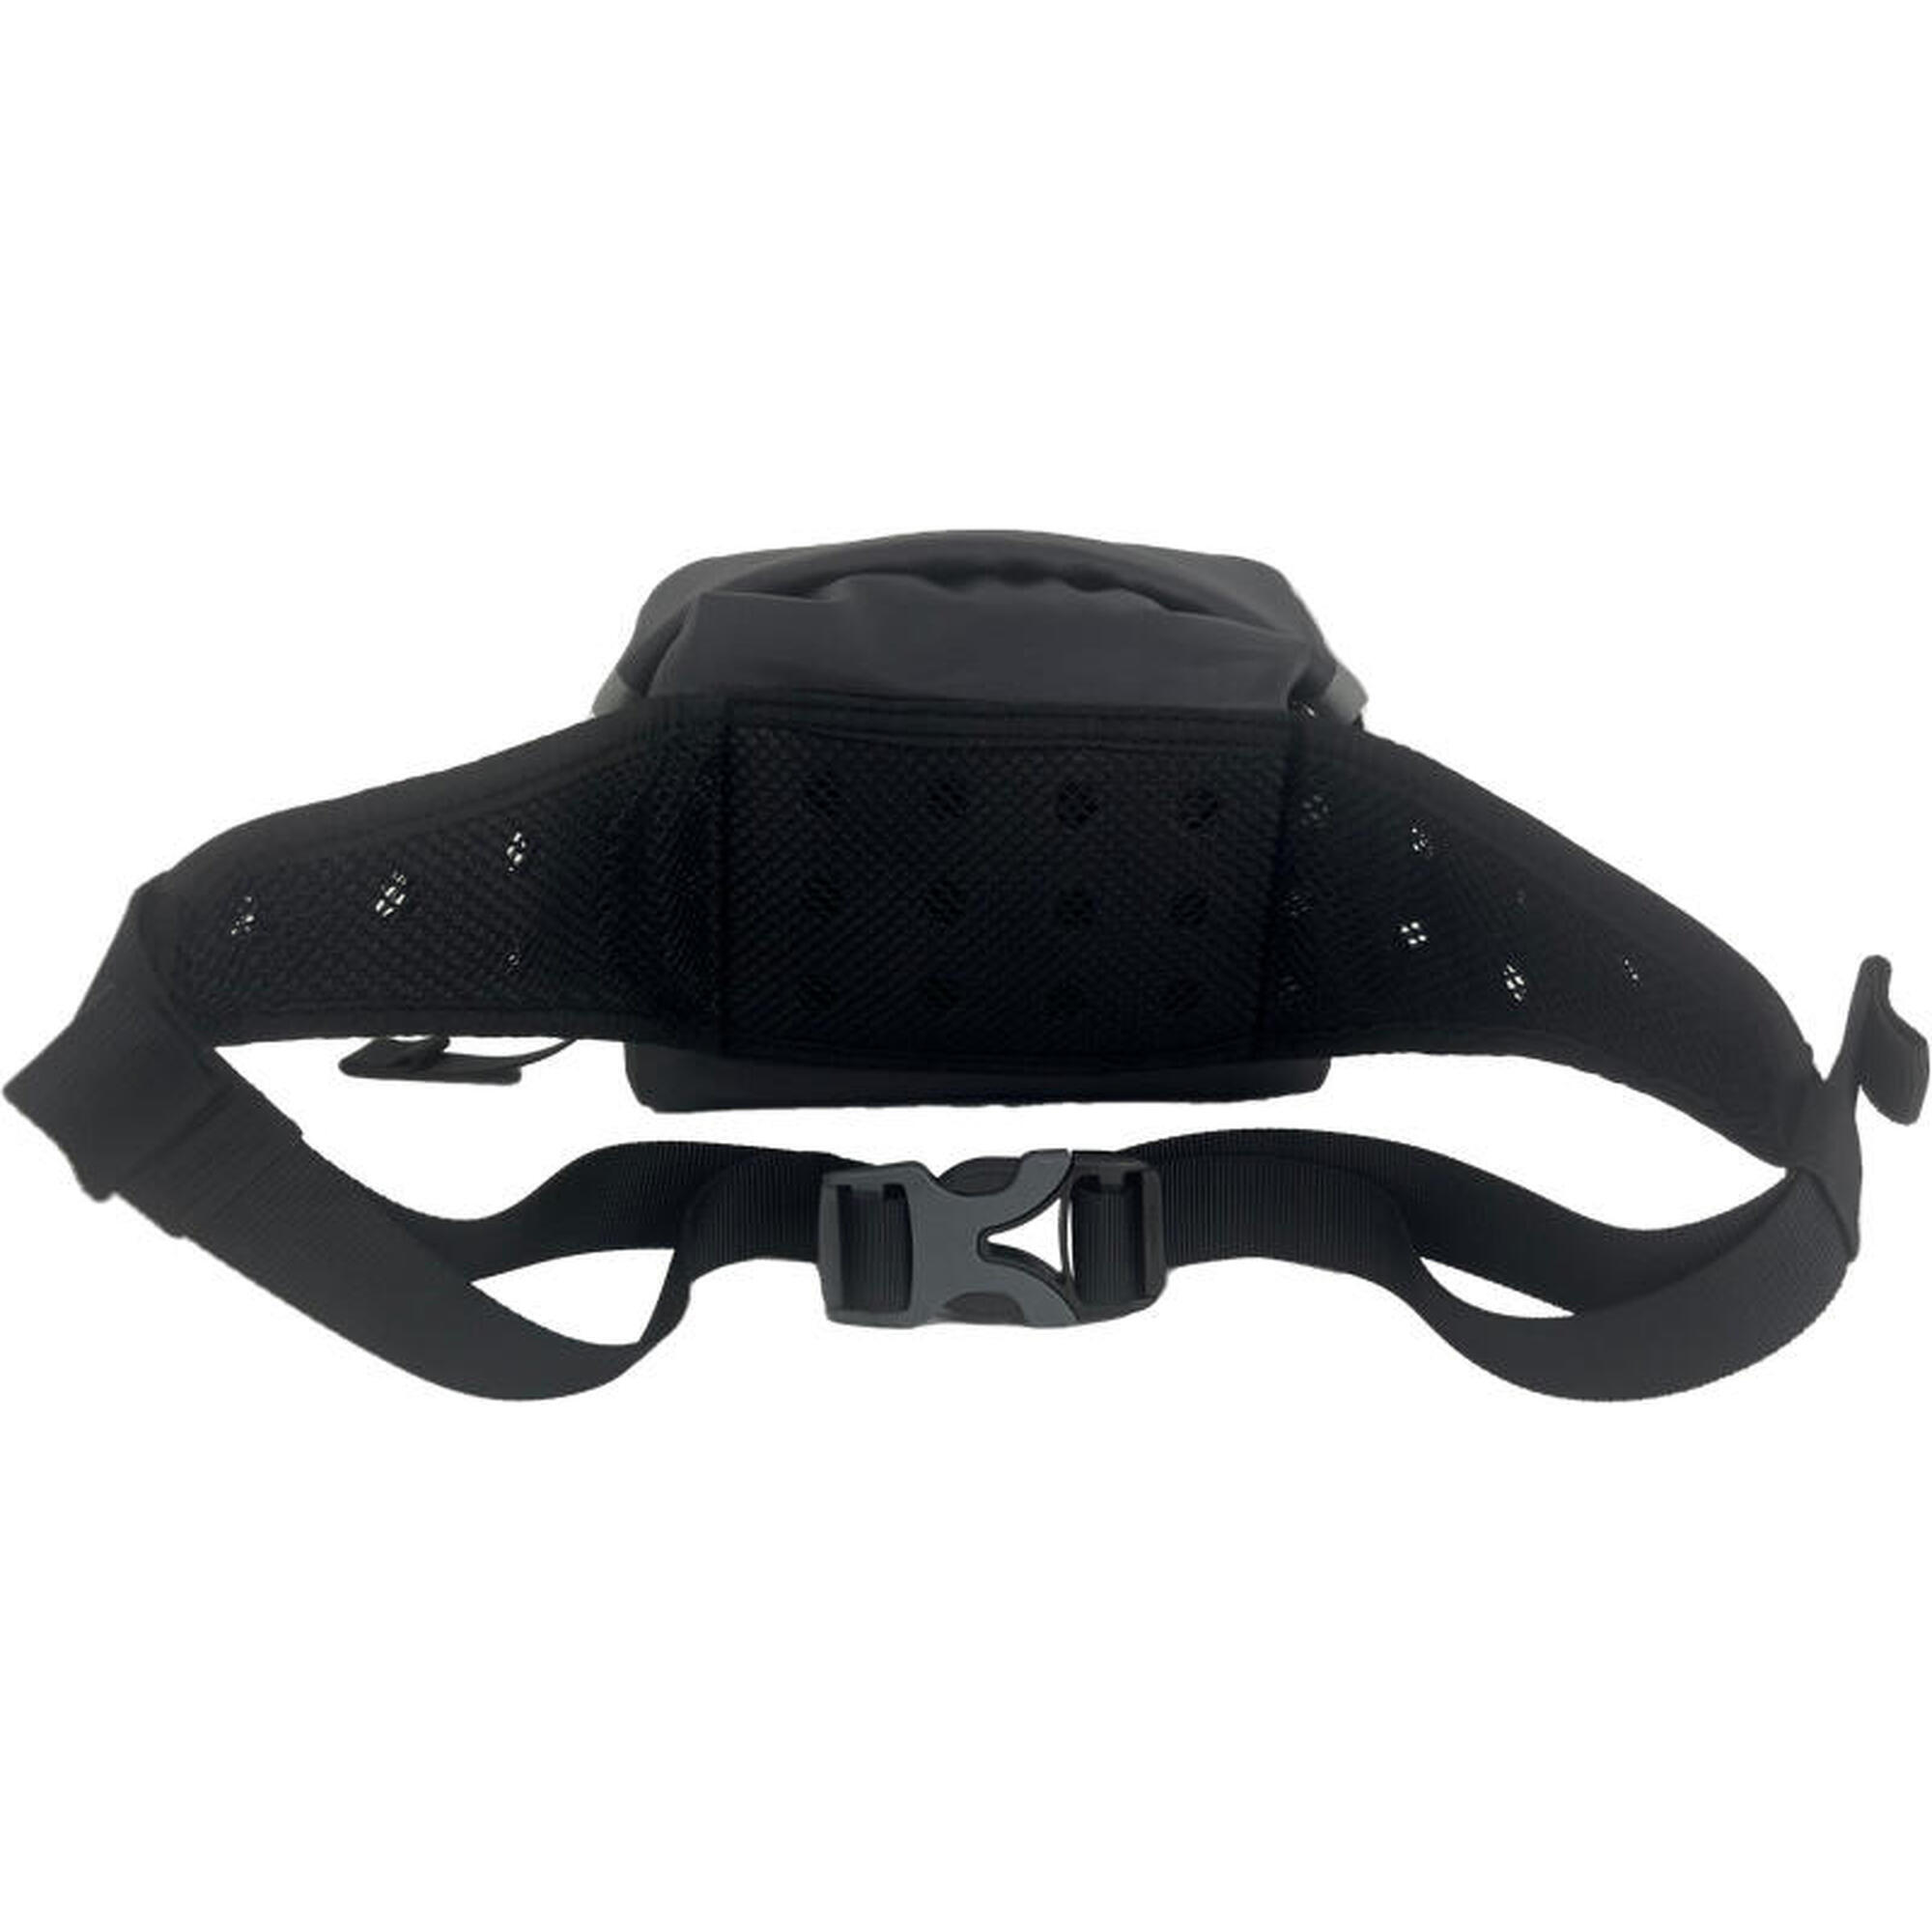 IPX4 Waterproof Roll-Top Waist Bag 3L - Black